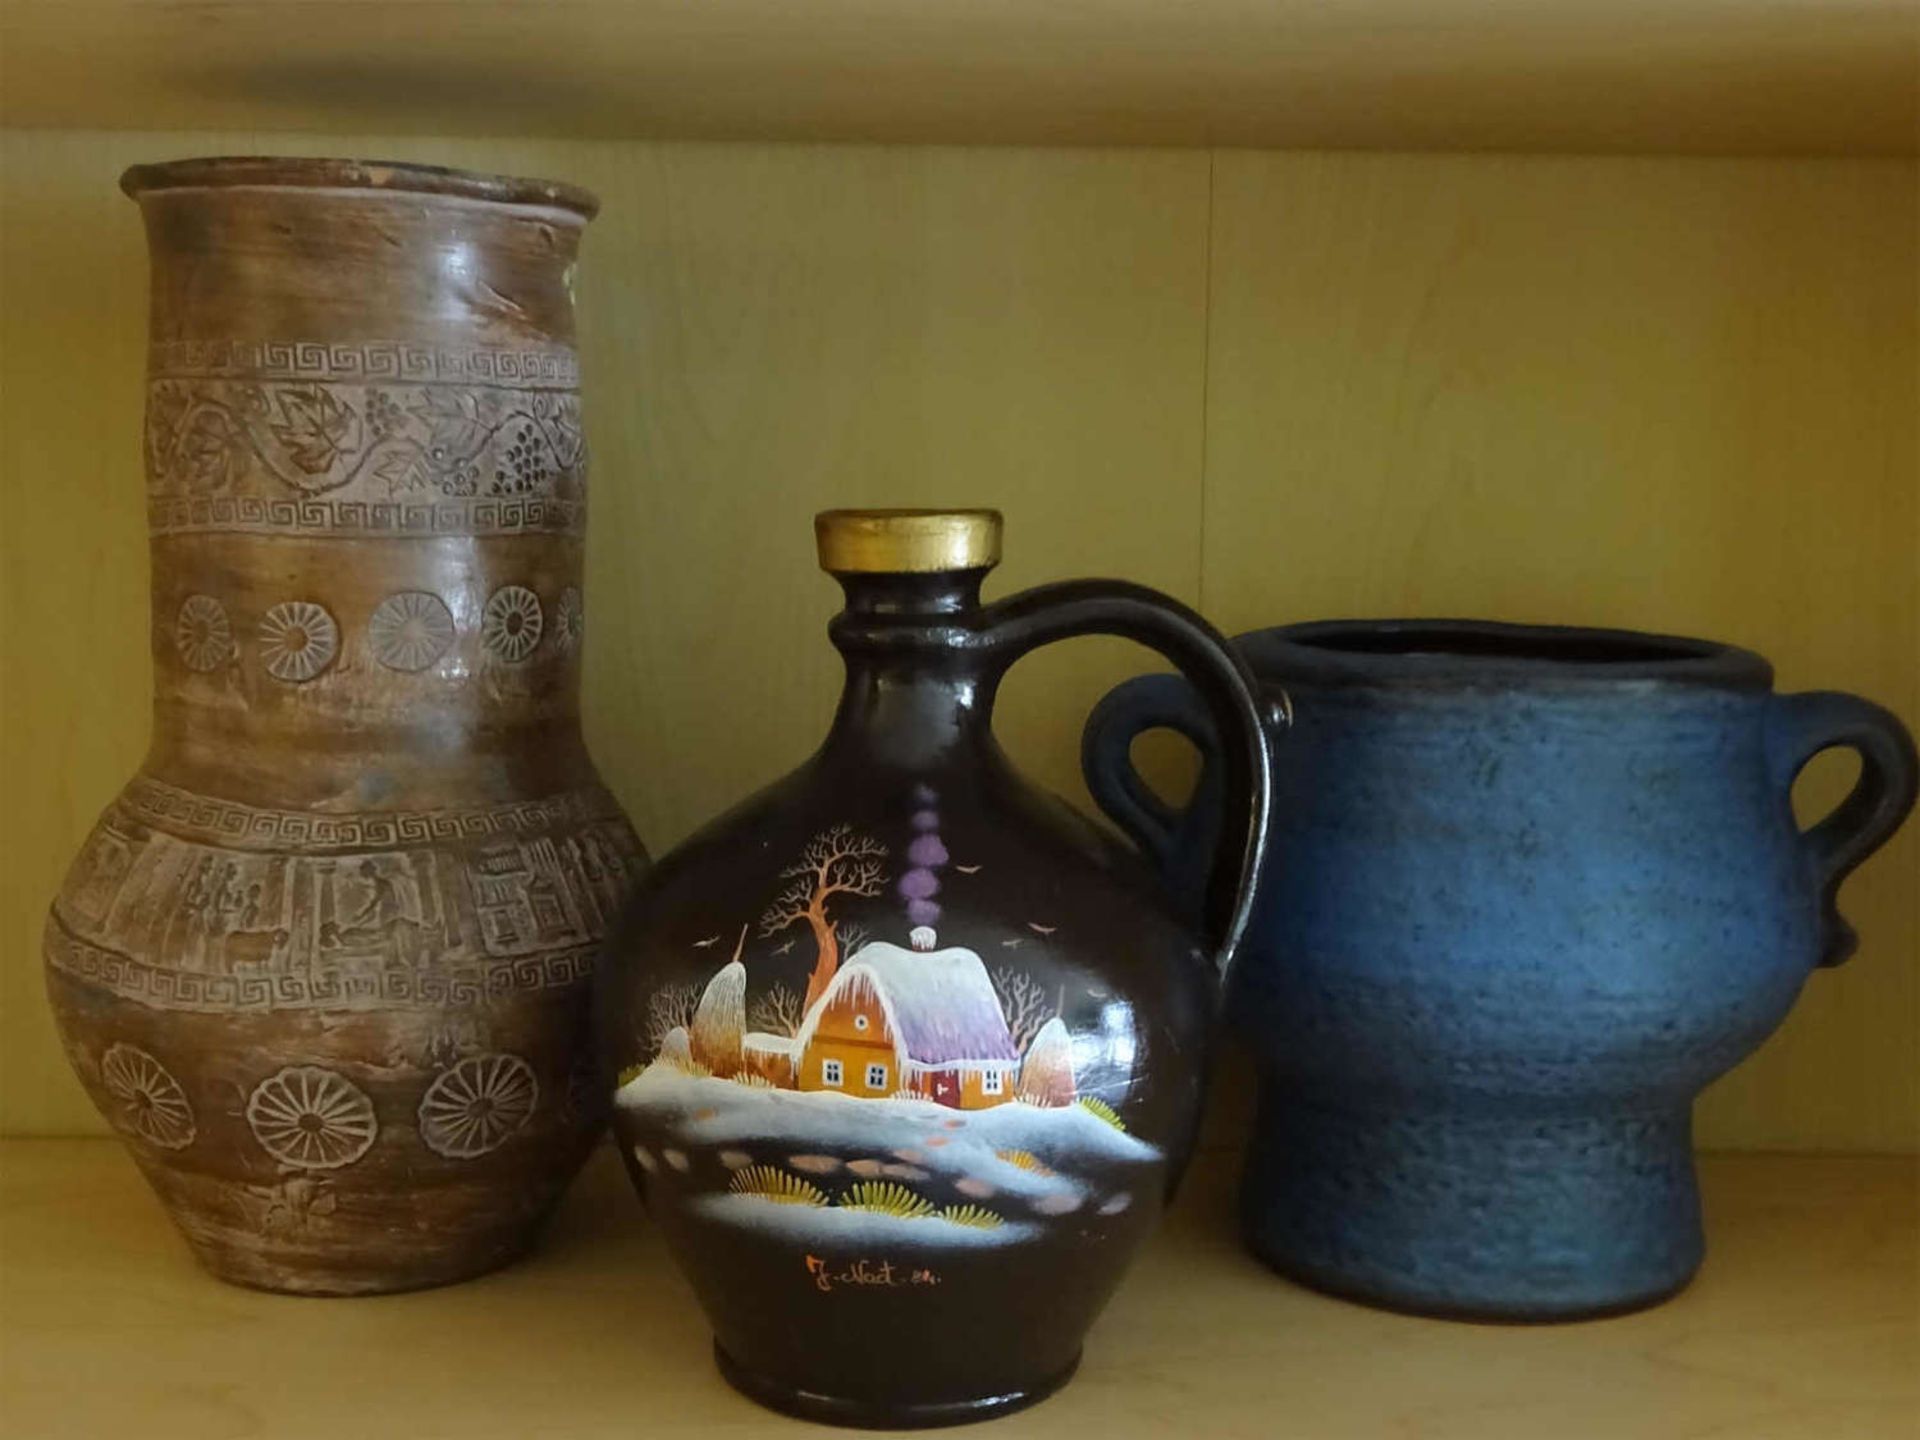 3 Teile Keramik aus Haushaltsauflösung3 parts ceramic from household dissolution